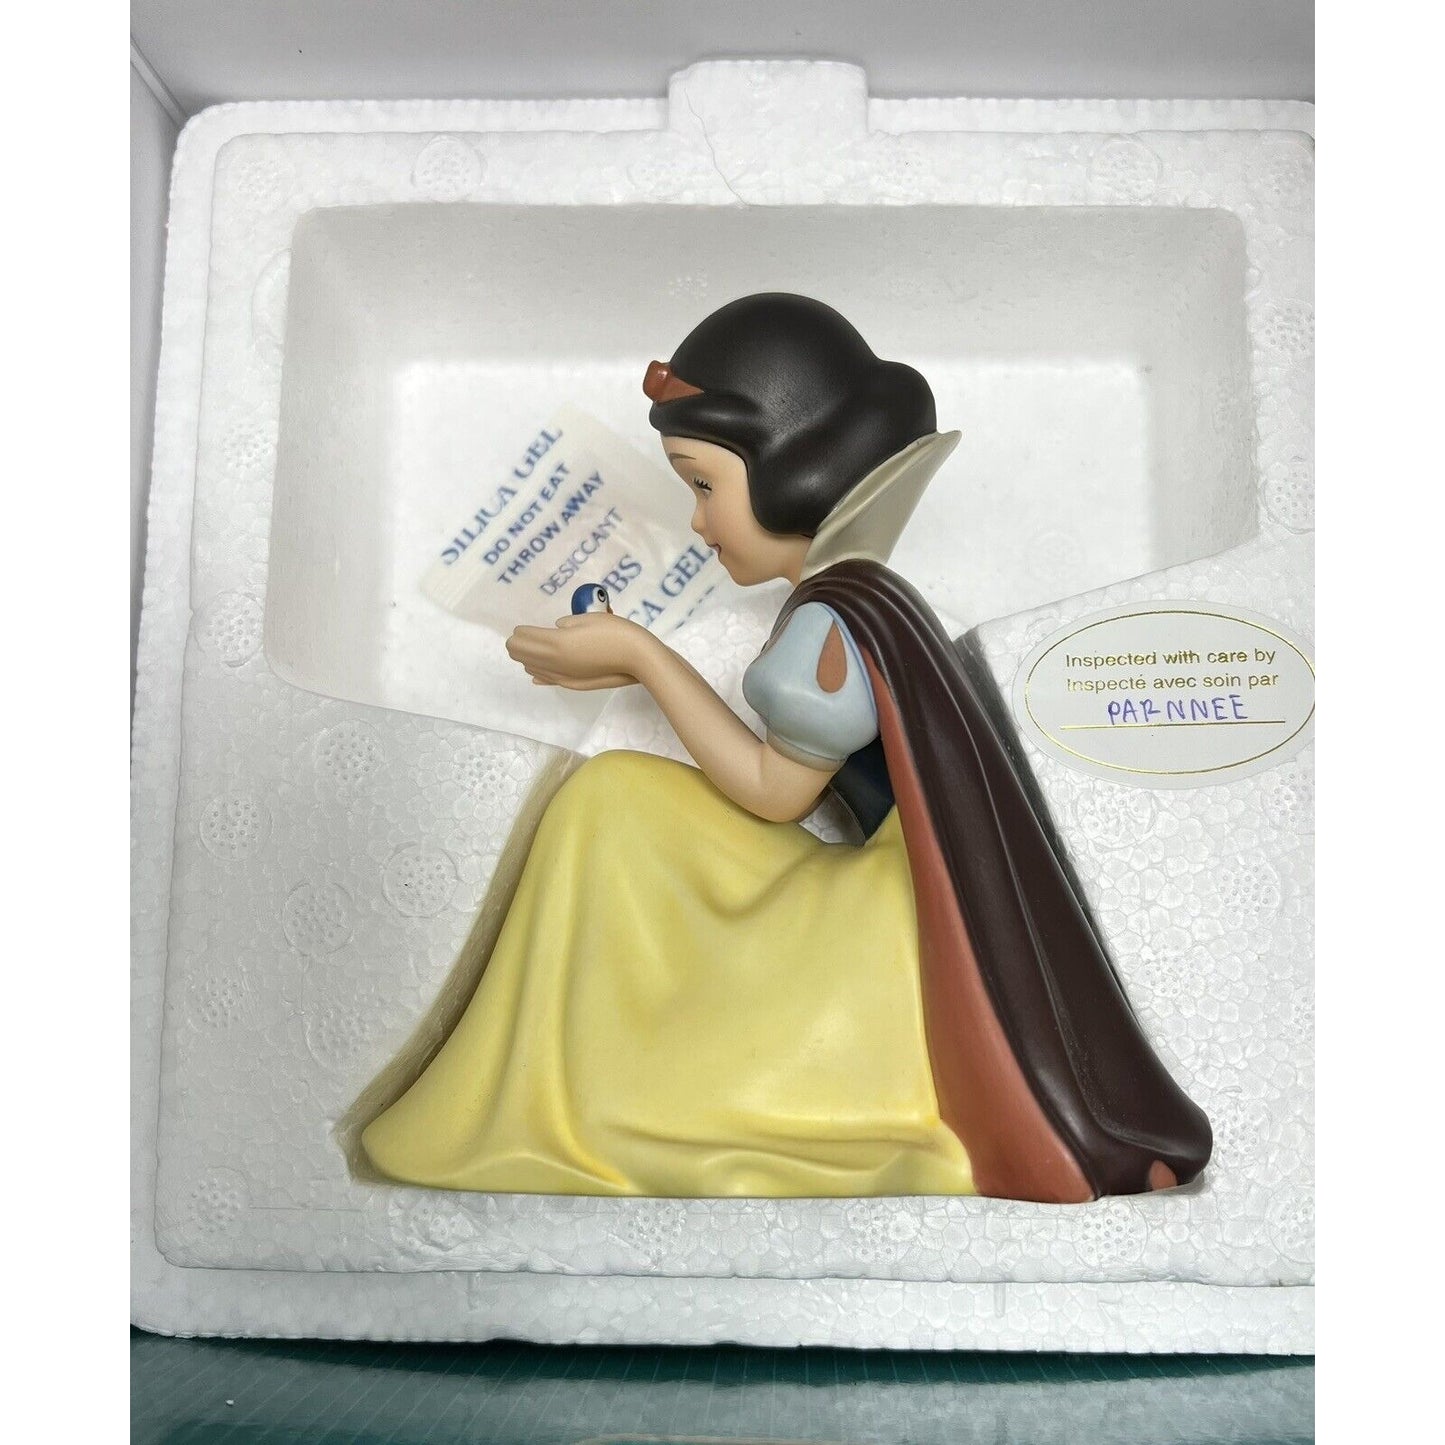 Walt Disney Classics WDCC 1217924 Snow White Won't You Smile For Me Figurine